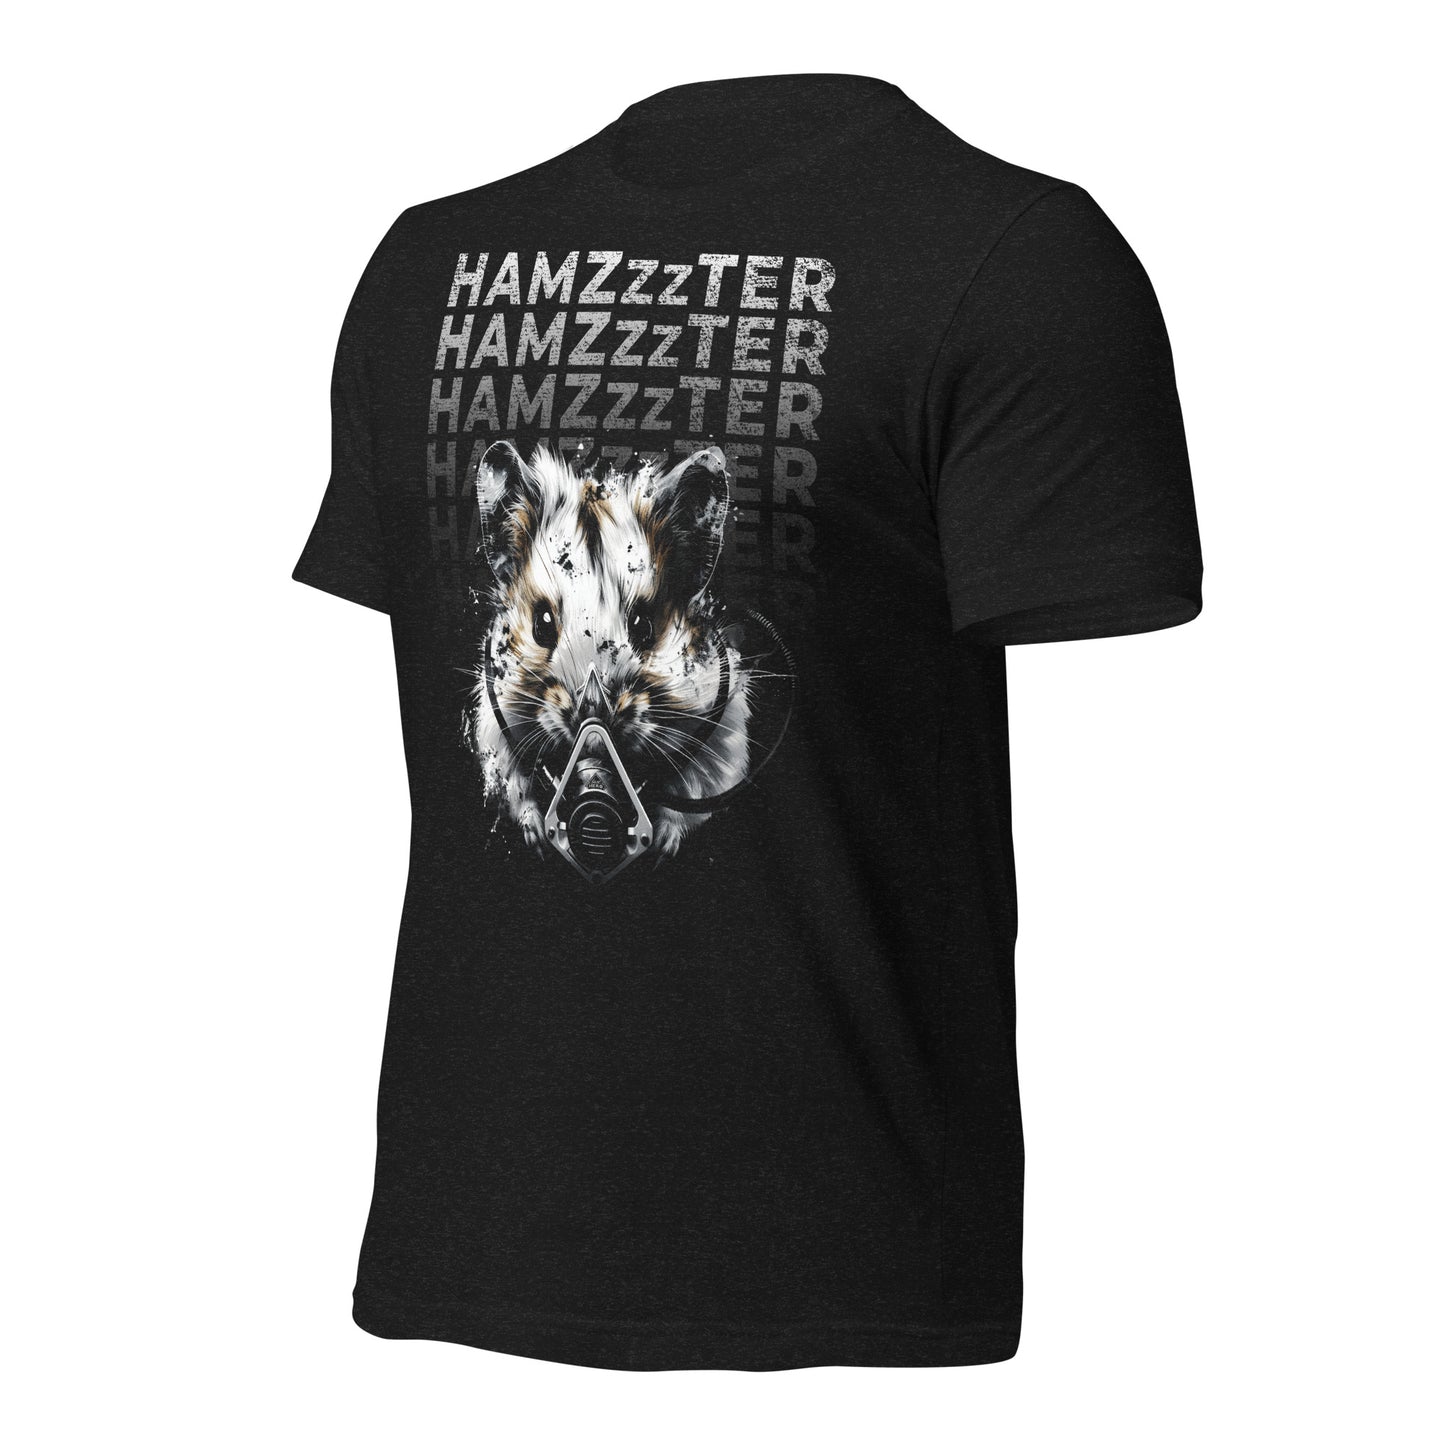 HamZzzter, Hamster wearing CPAP, CPAP, Animals, Sleep Apnea, Graphic Tee Shirt, Black